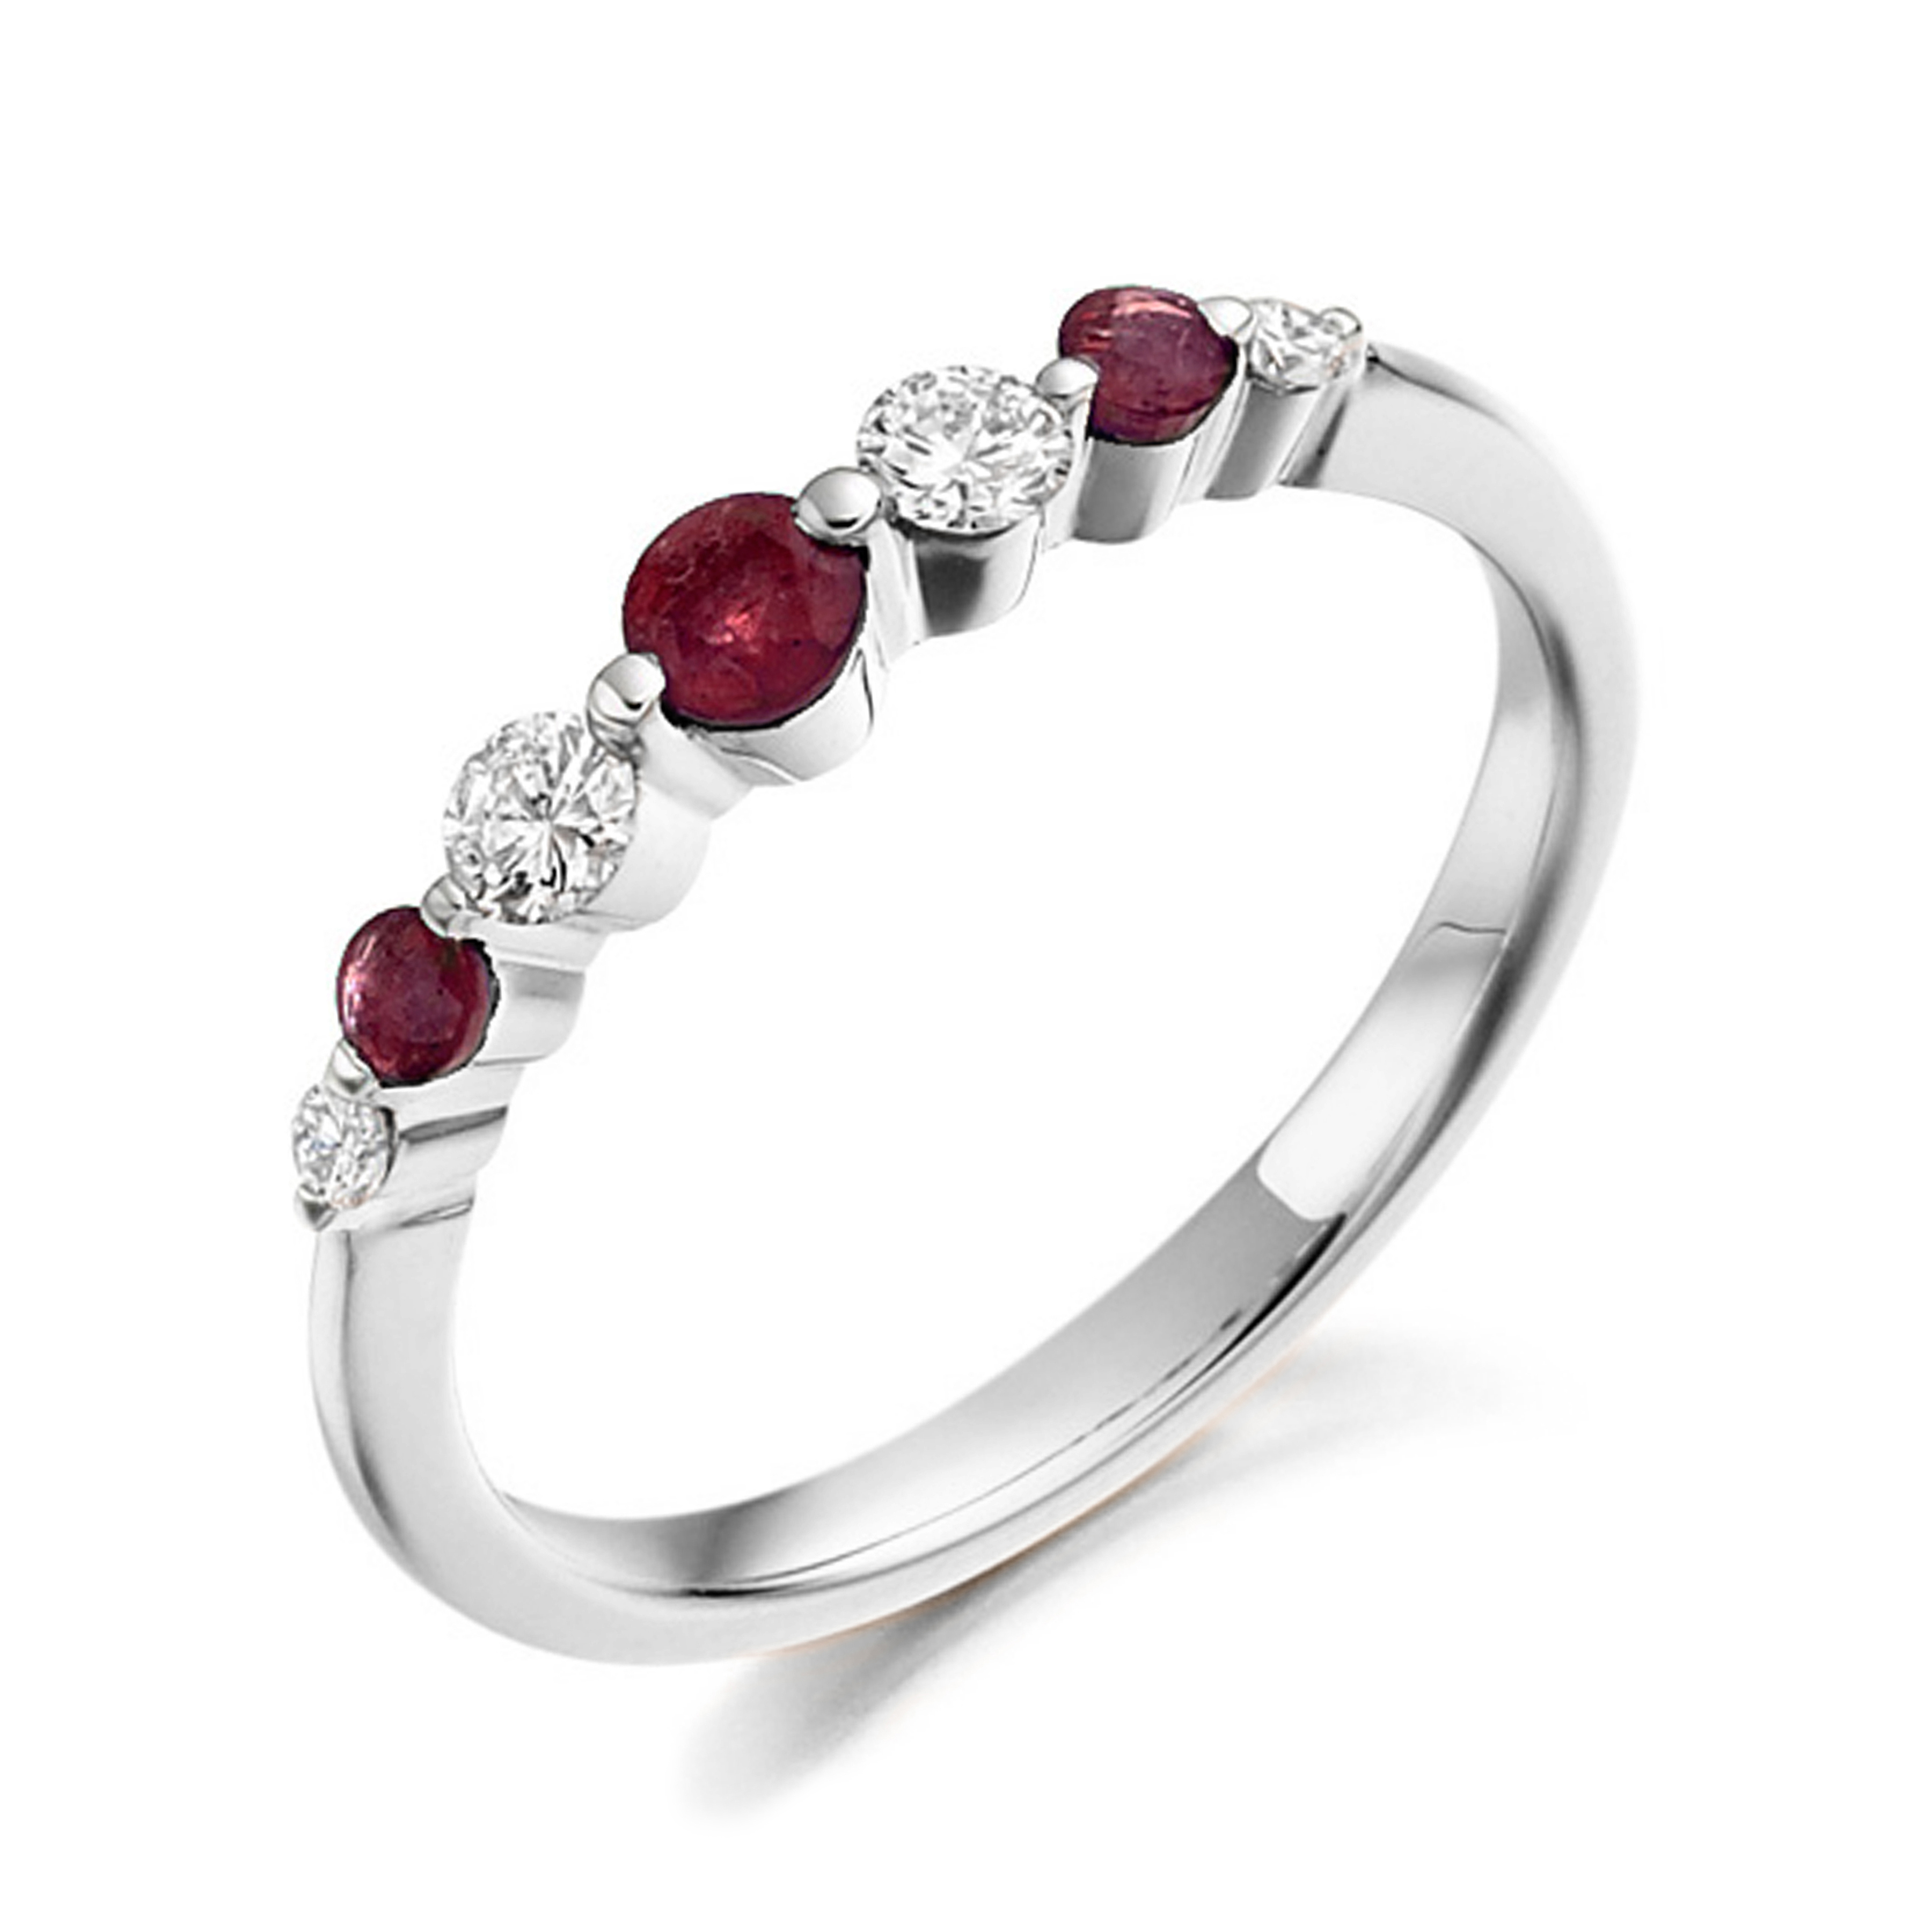 4mm,3mm Round Ruby Graduating Five Stone Diamond And Gemstone Engagement Ring